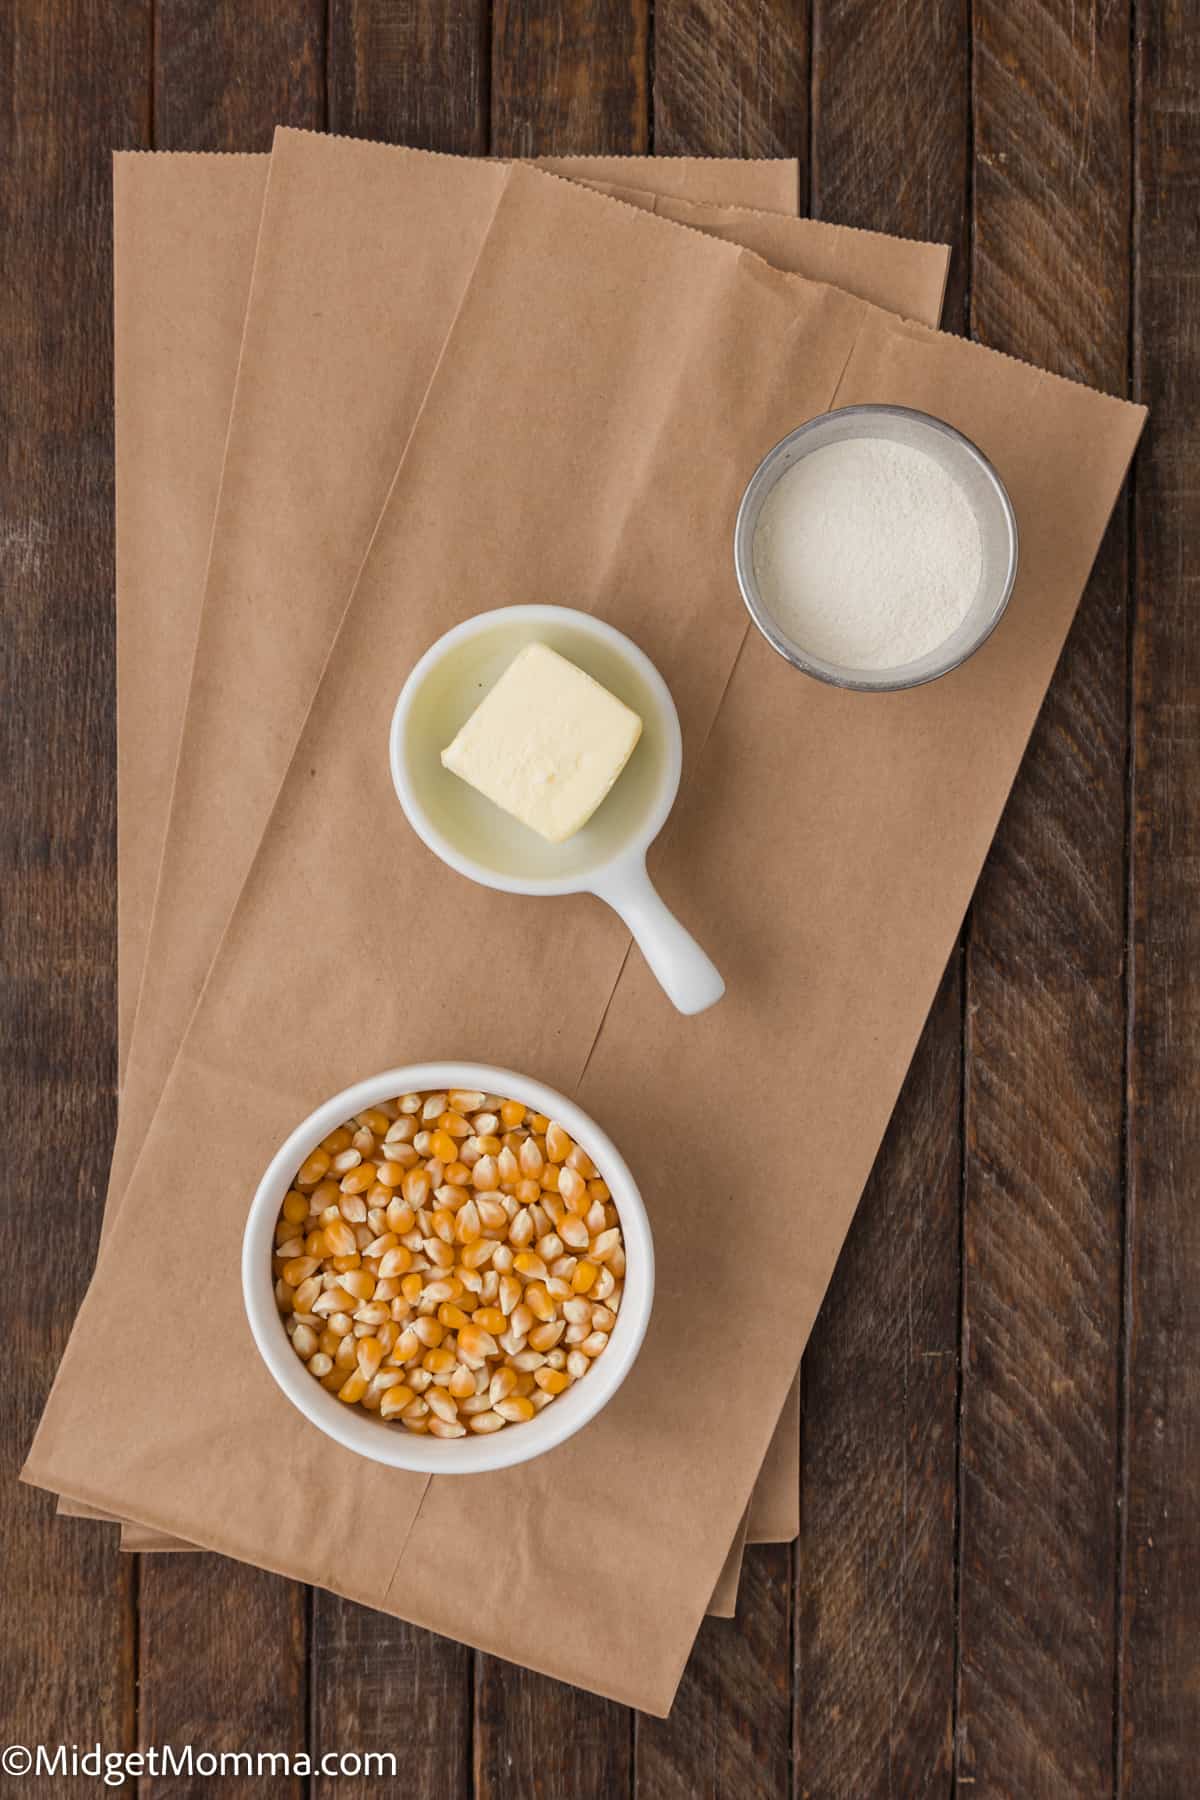 Ingredients for making brown bag microwave popcorn arranged on a wooden surface: a bowl of popcorn kernels, a bowl of salt, a stick of butter.